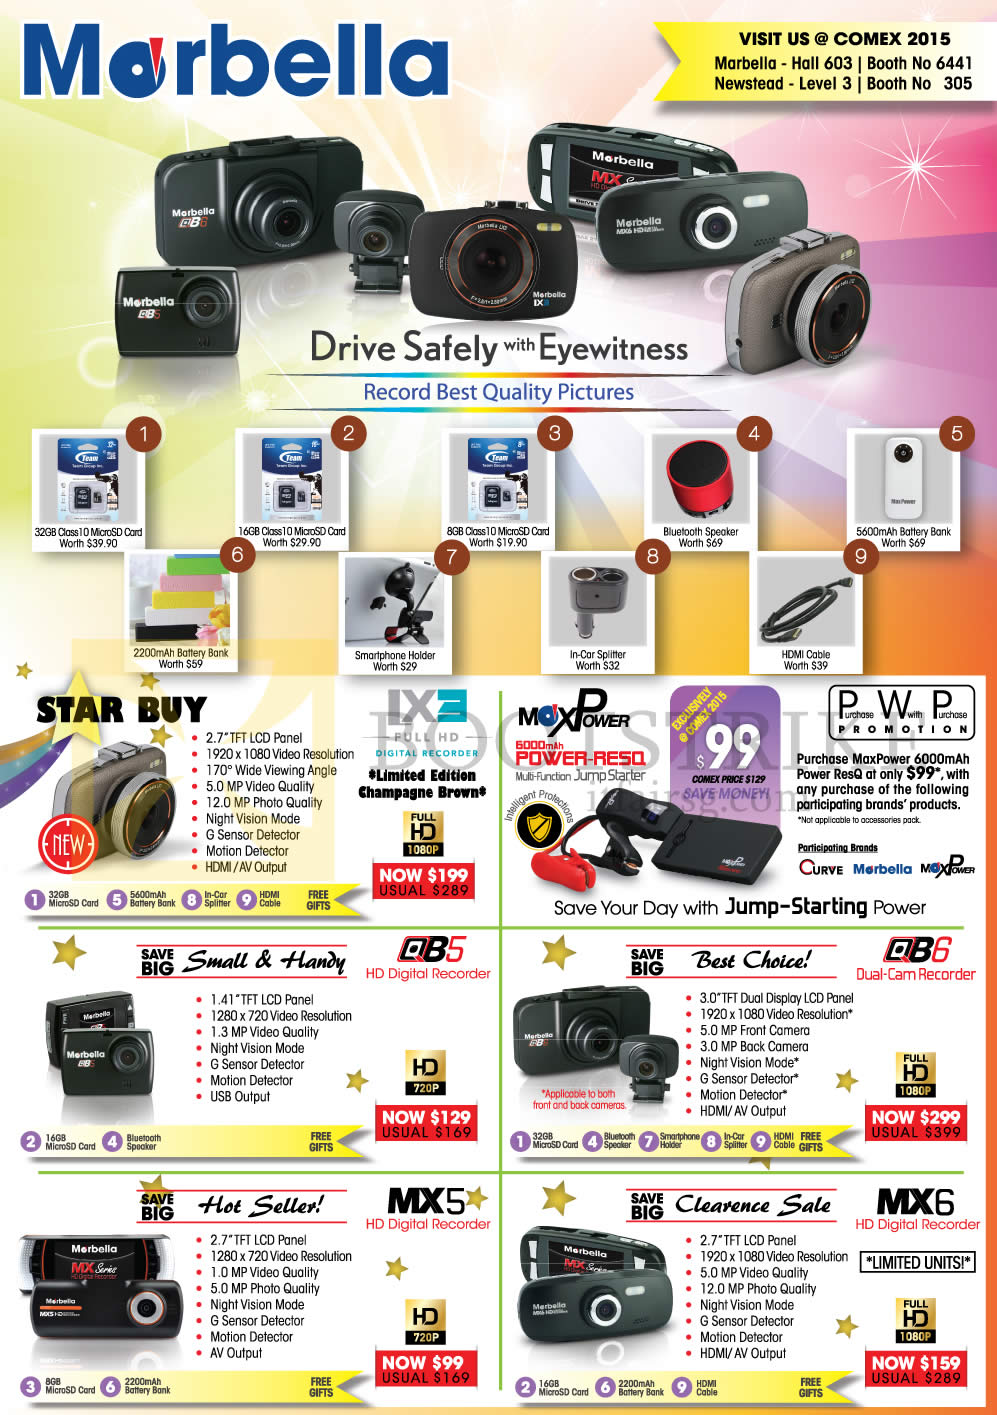 COMEX 2015 price list image brochure of Maka GPS Marbella Car Cameras IX3, Power RESO, QB5, QB6, MX5, MX6